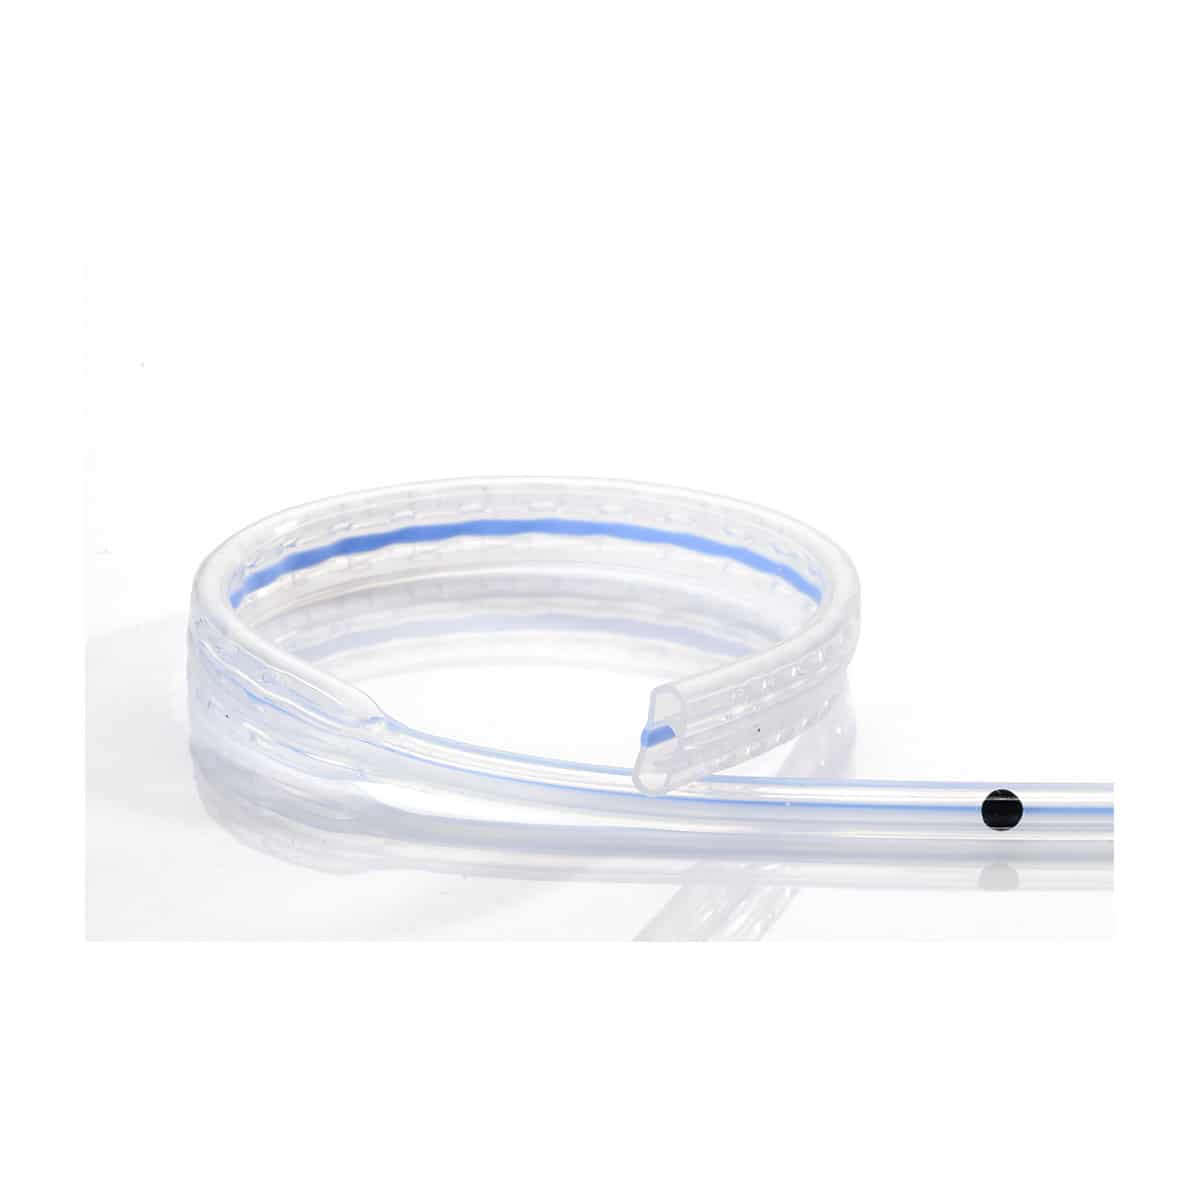 Jackson-Pratt™ Silicone Catheters by Redax - Med Alliance